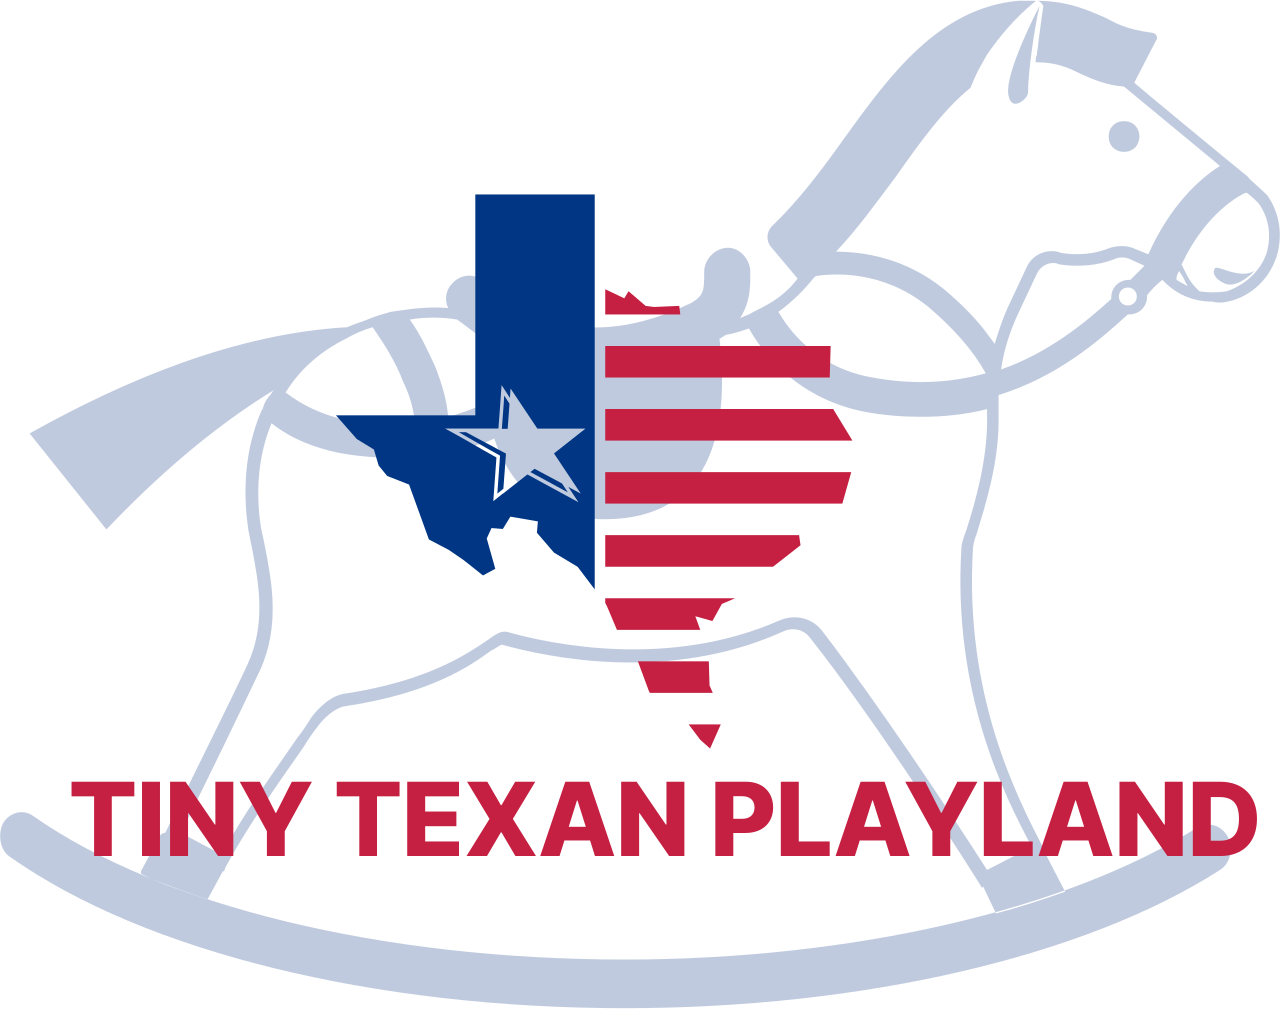 Tiny Texan Playland's logo